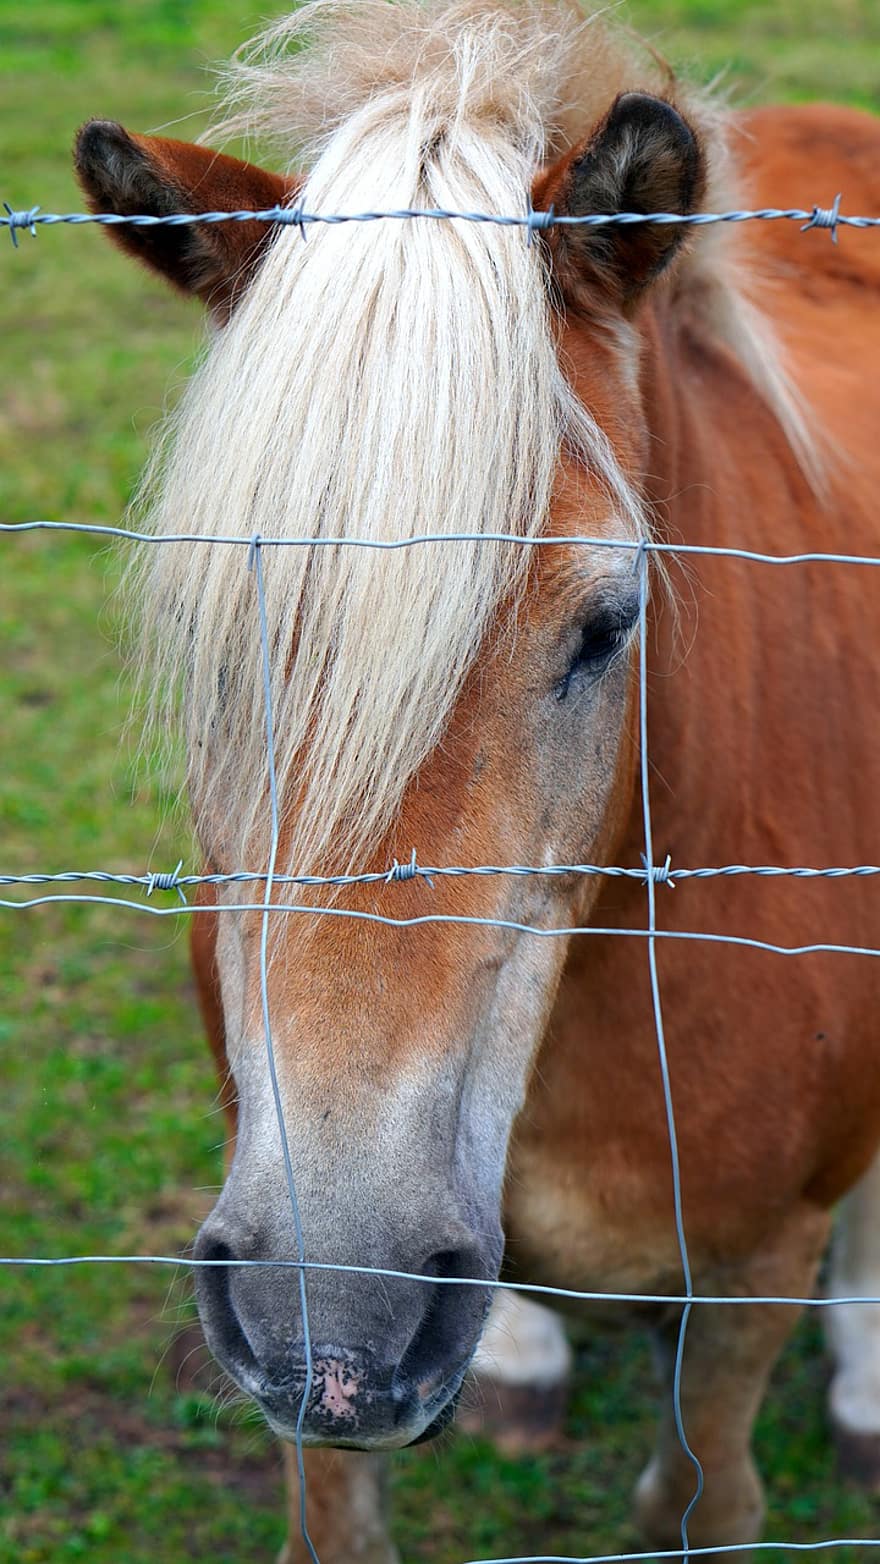 Horse, Horse Head, Fence, Animal, Demarcation, Paddock, Ranch, Farm, Animal Portrait, Animal World, Brown Horse